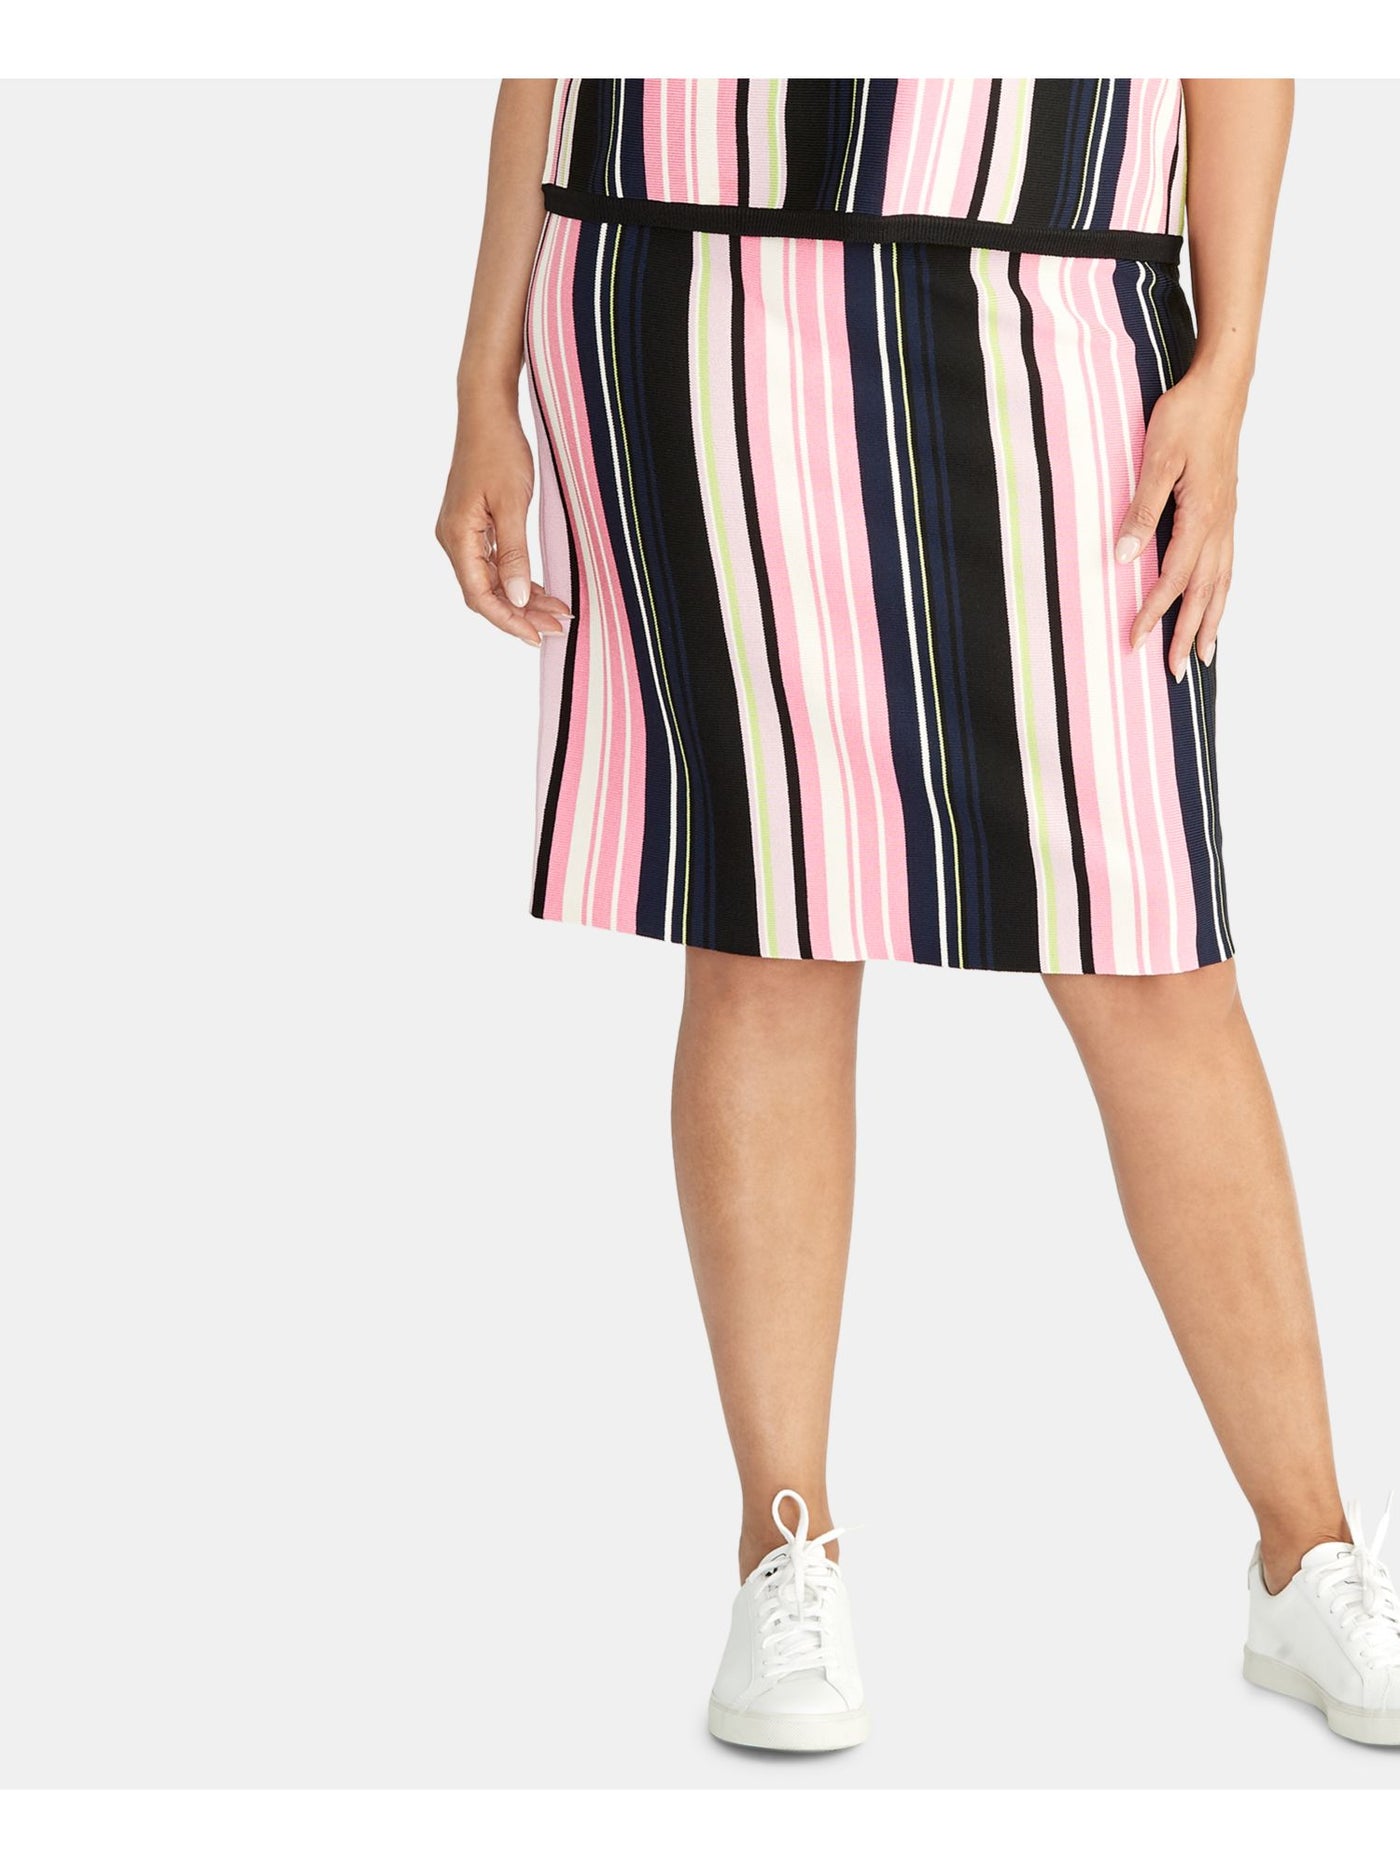 RACHEL RACHEL ROY Womens Pink Striped Knee Length A-Line Skirt Plus 3X